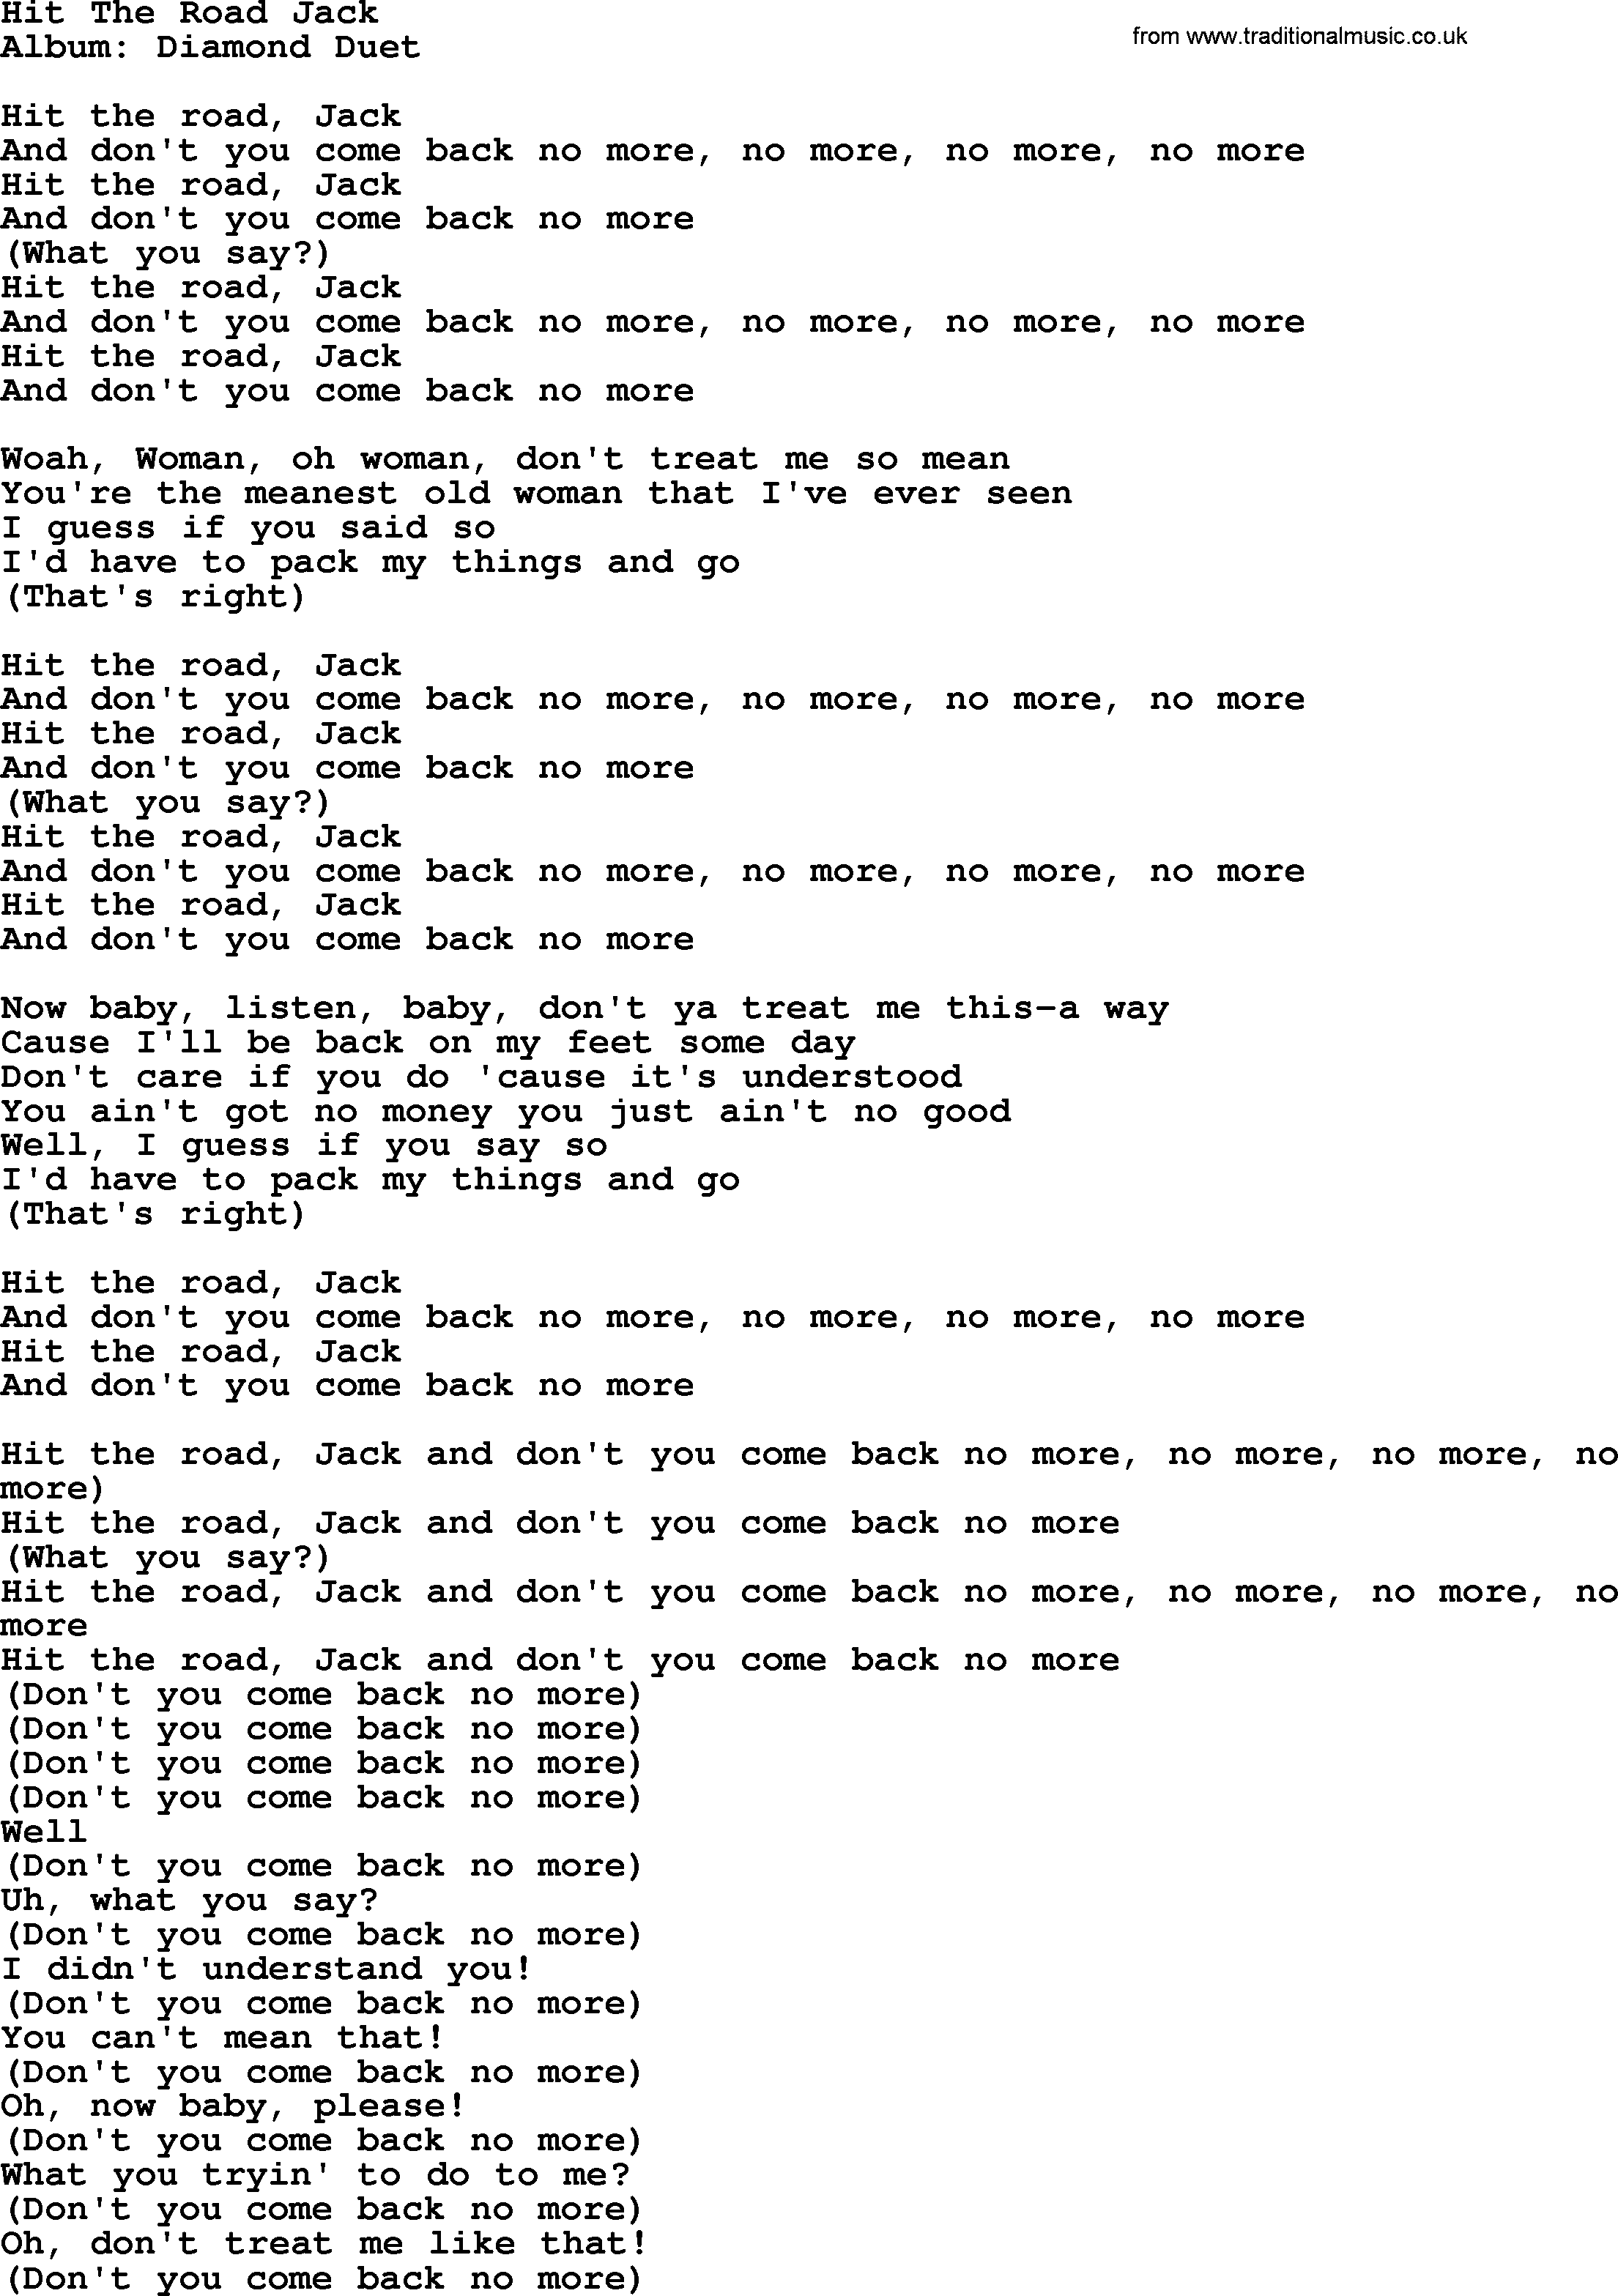 Loretta Lynn song: Hit The Road Jack lyrics